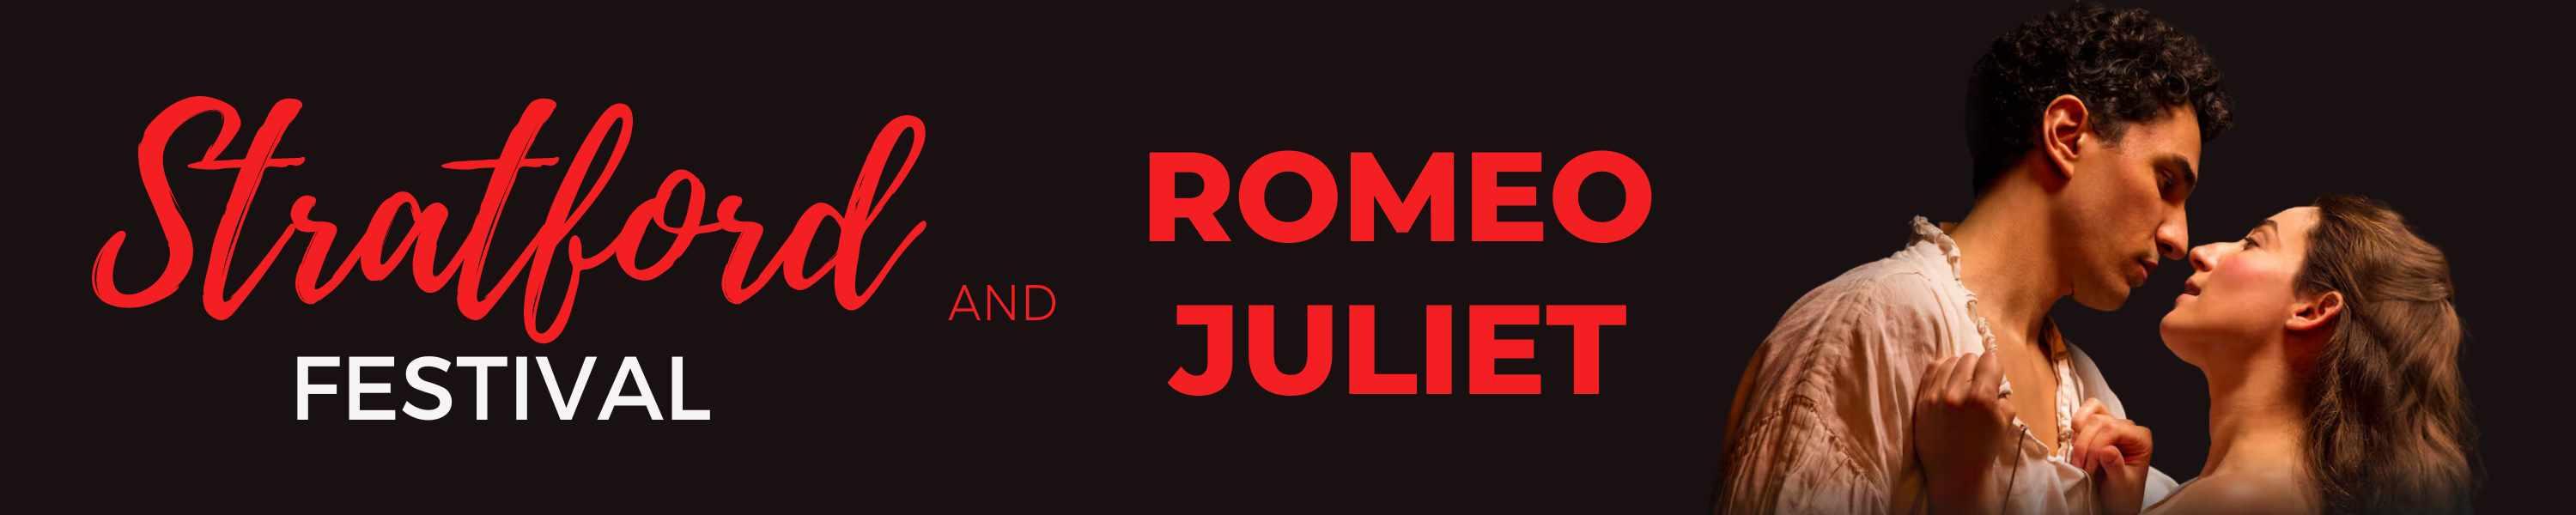 Romeo & Juliet @ Stratford Festival